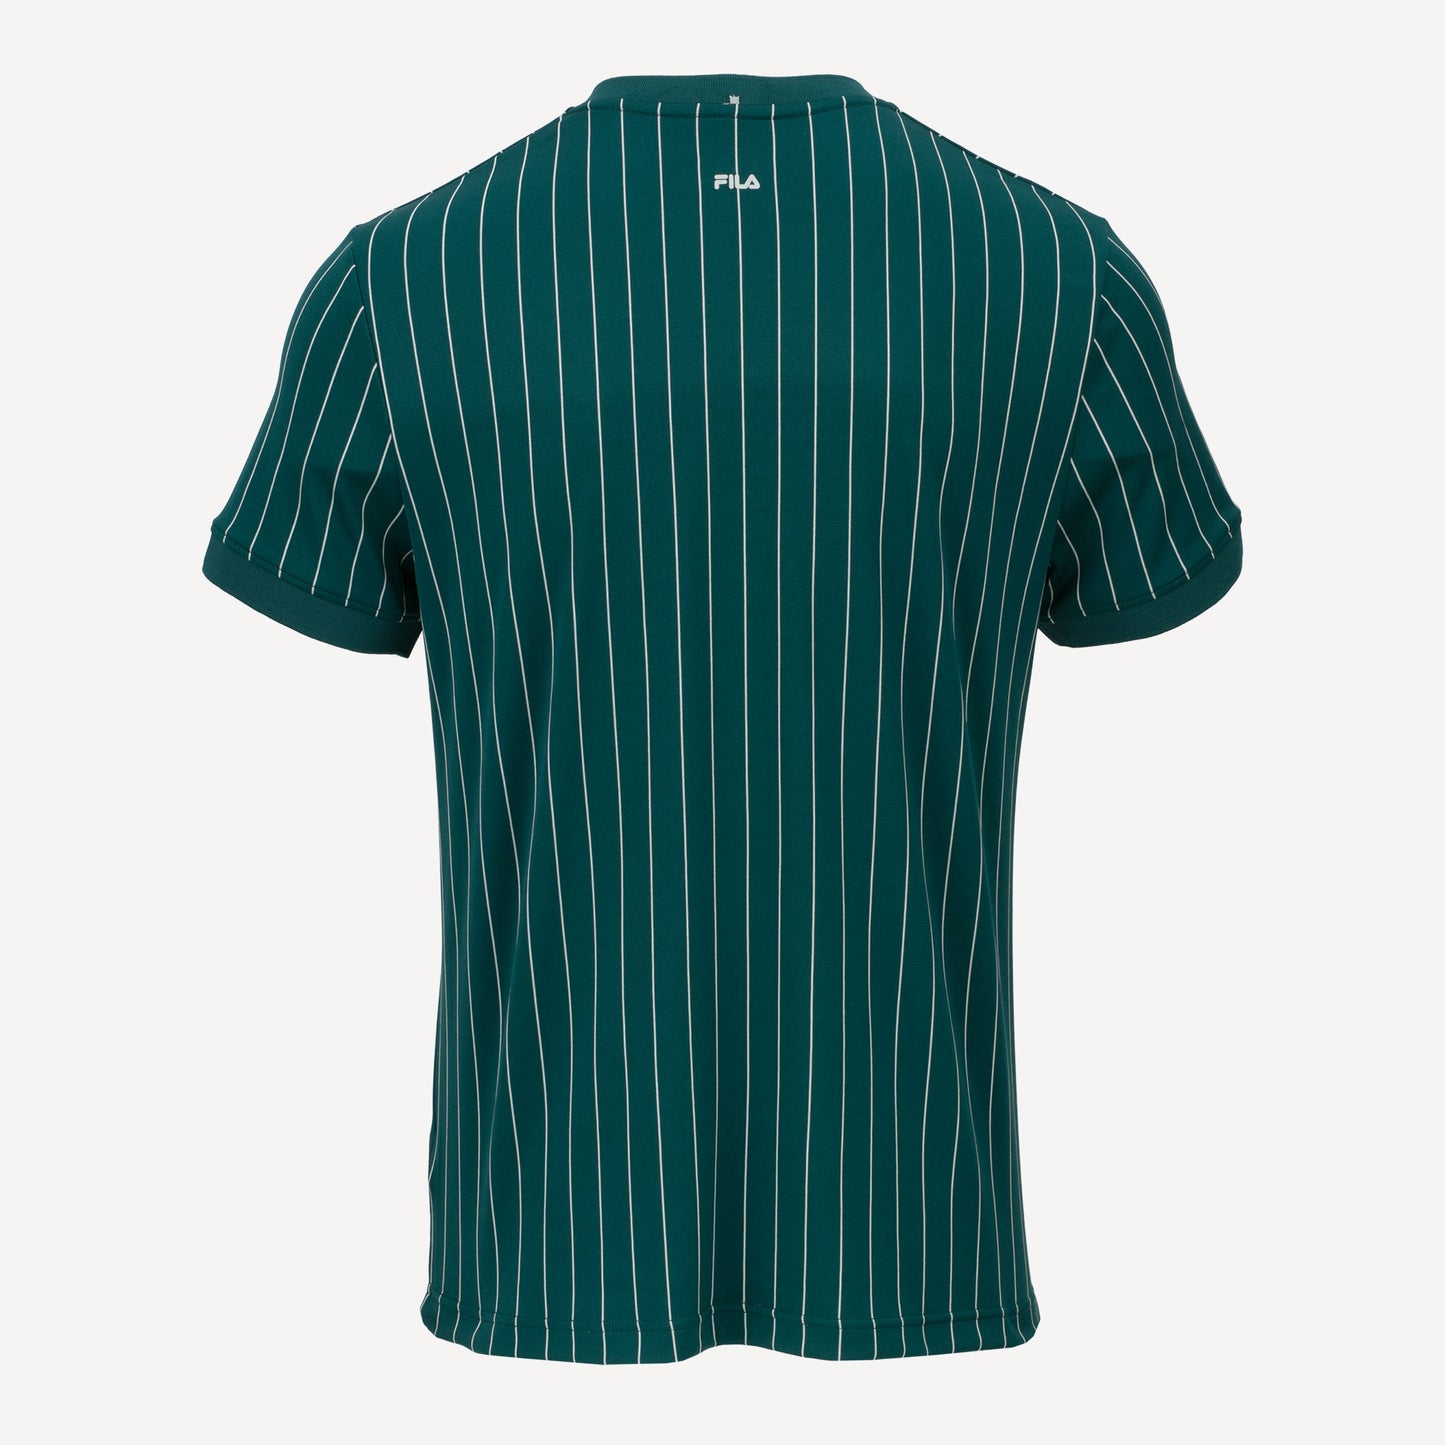 Fila Men's Stripes Button Tennis Shirt Green (2)